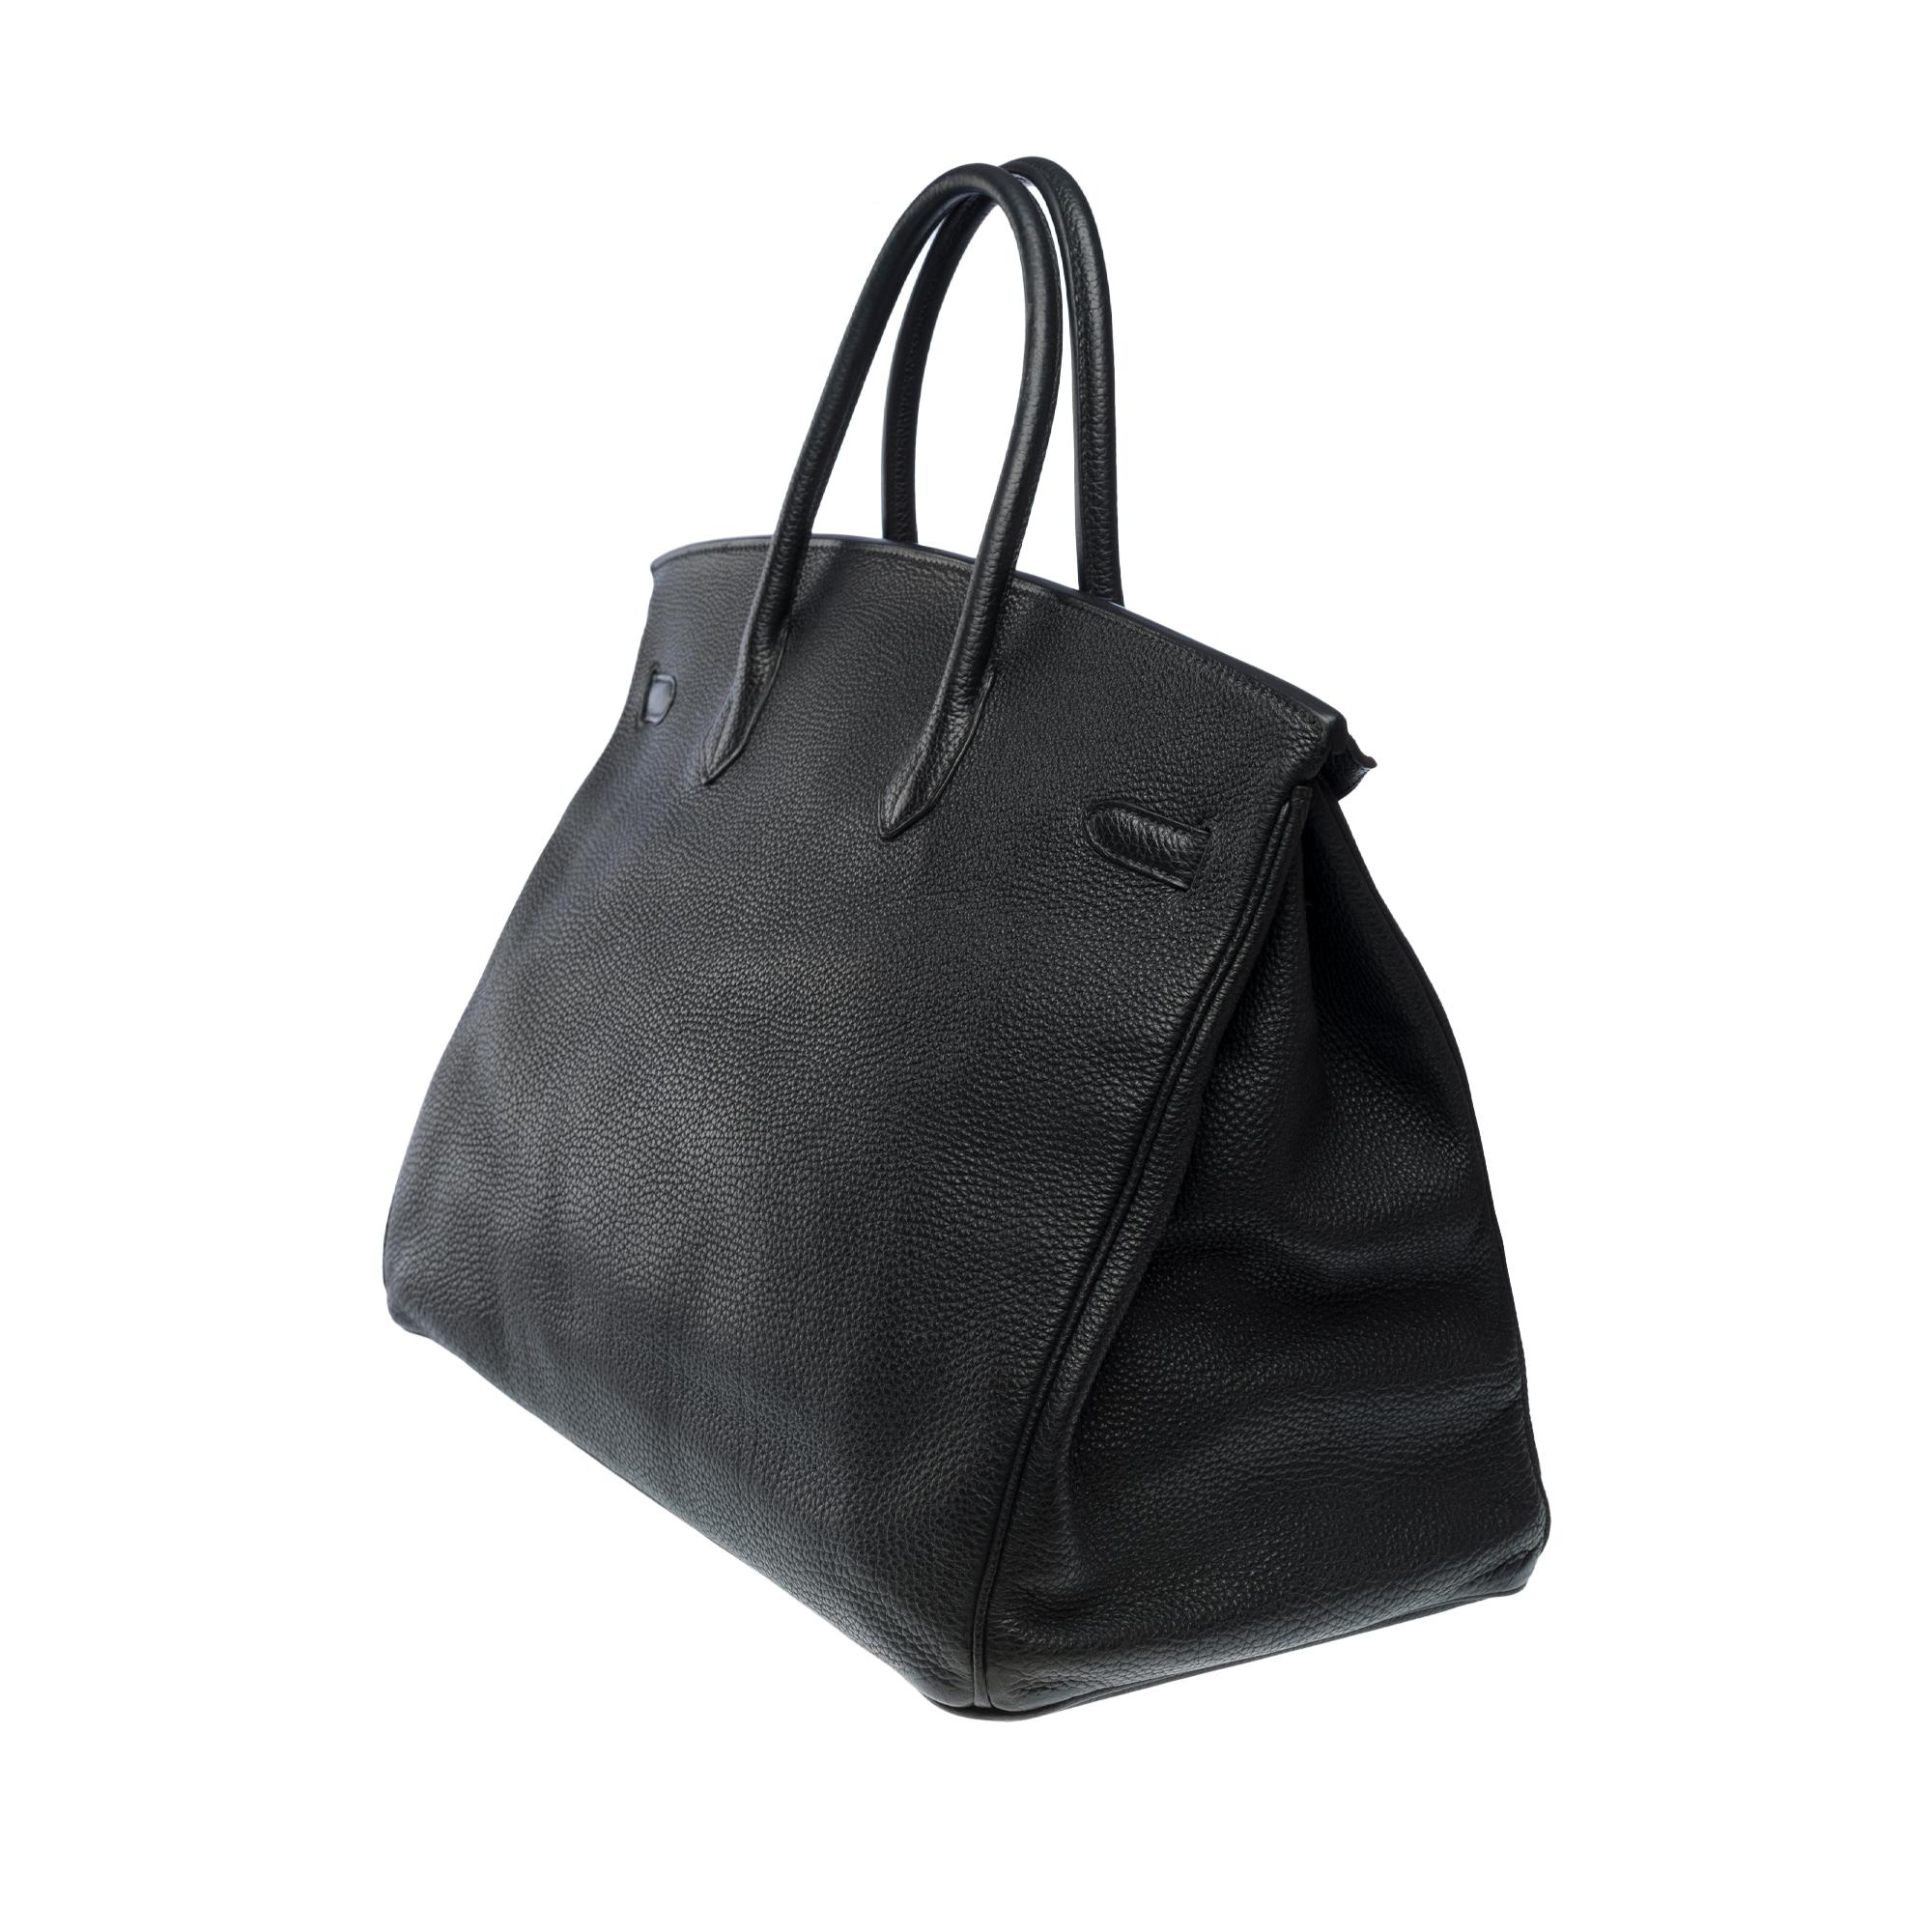 Very Classy Hermes Birkin 40 handbag in Black Togo Calf leather, SHW 1